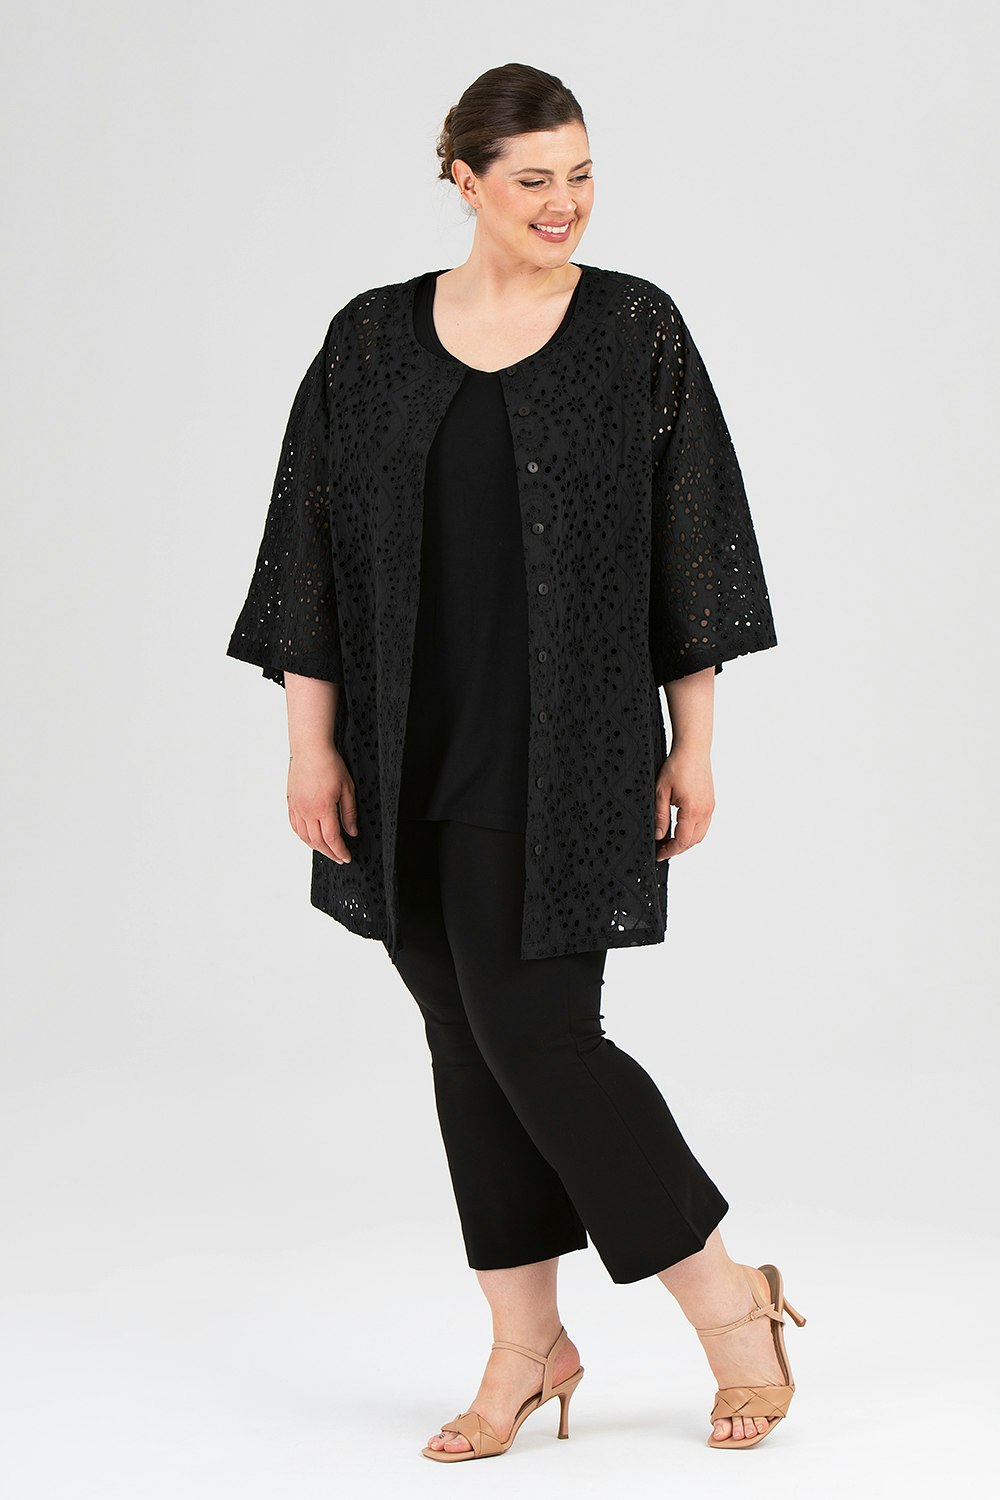 Nio shirt/dress black embroidery